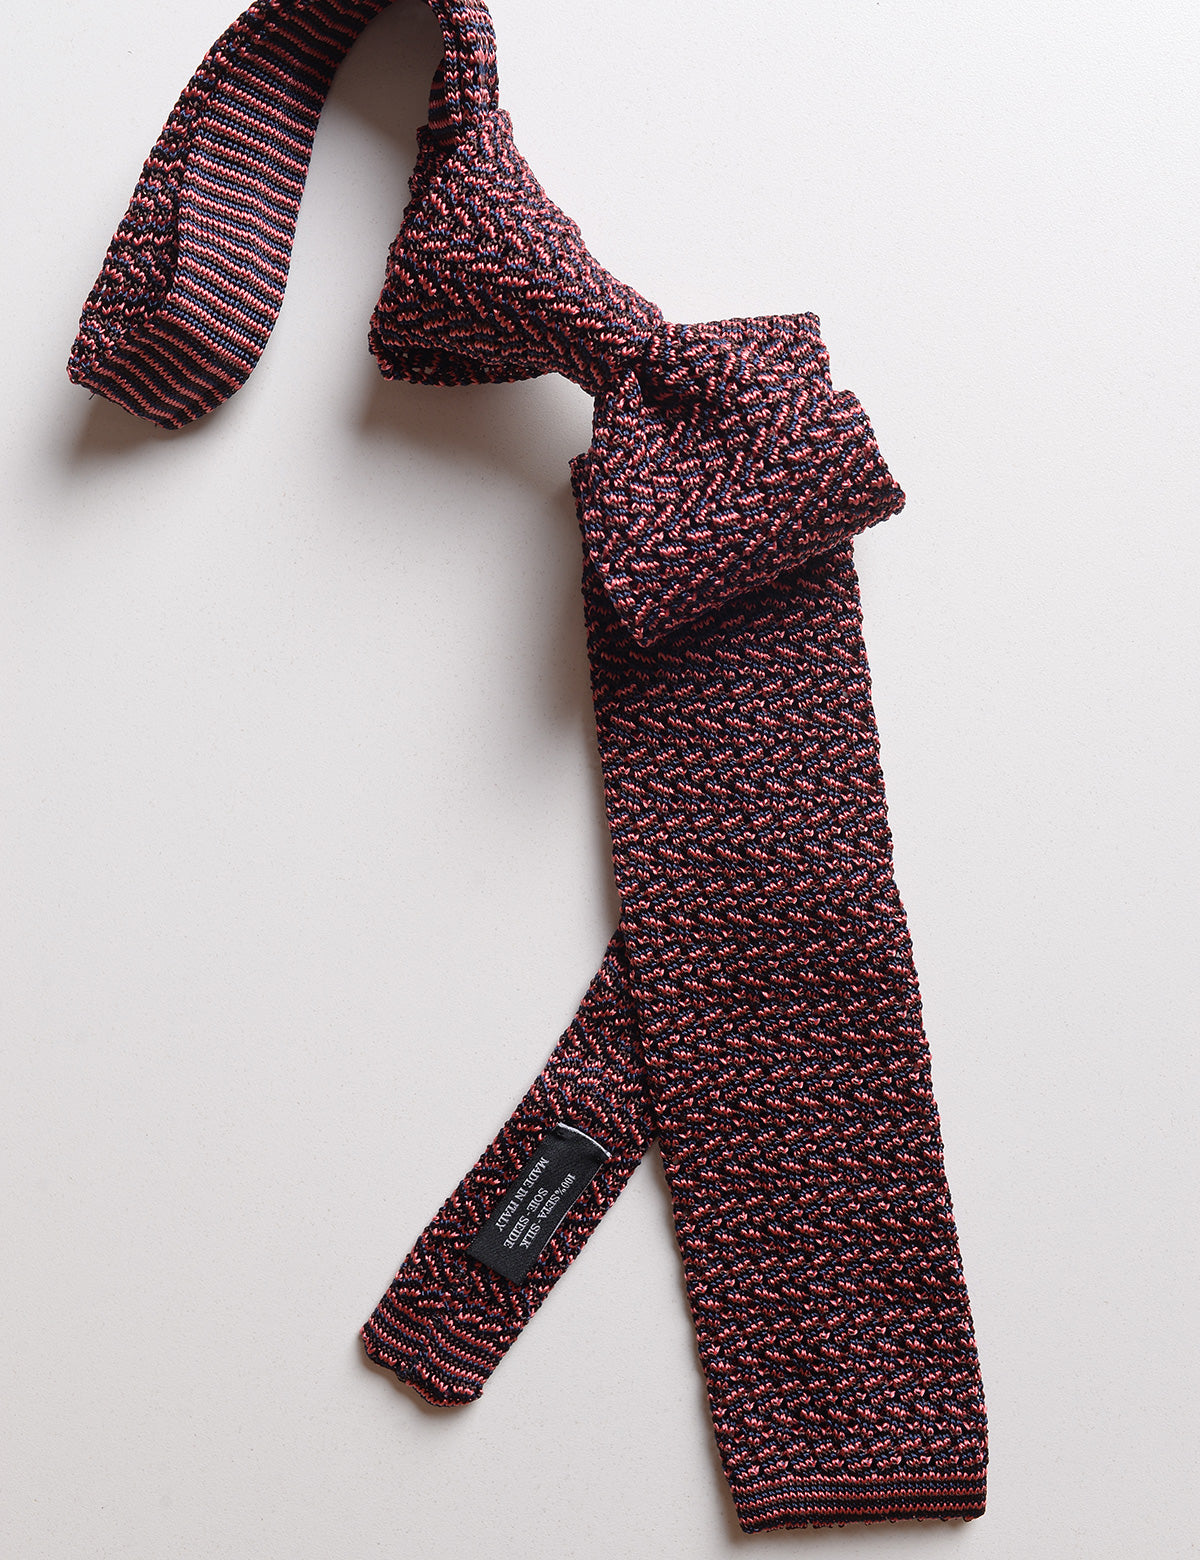 Knit detail of Micro Pattern Silk Knit Tie - Midnight Rose